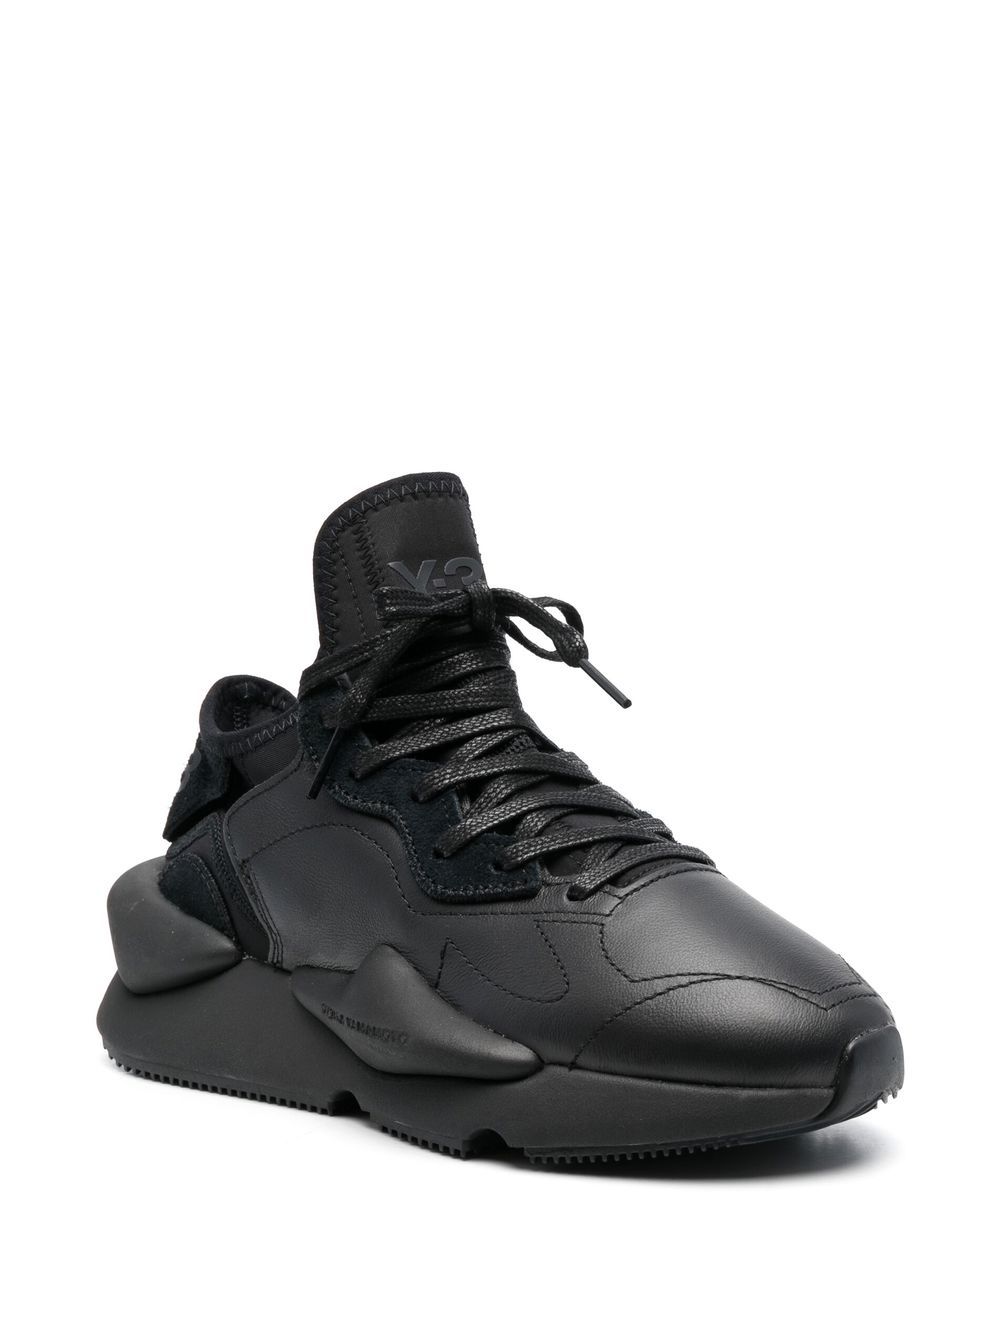 Design Y 3 Kaiwa Sneakers Men Women Shoes Y3 Chunky Platform